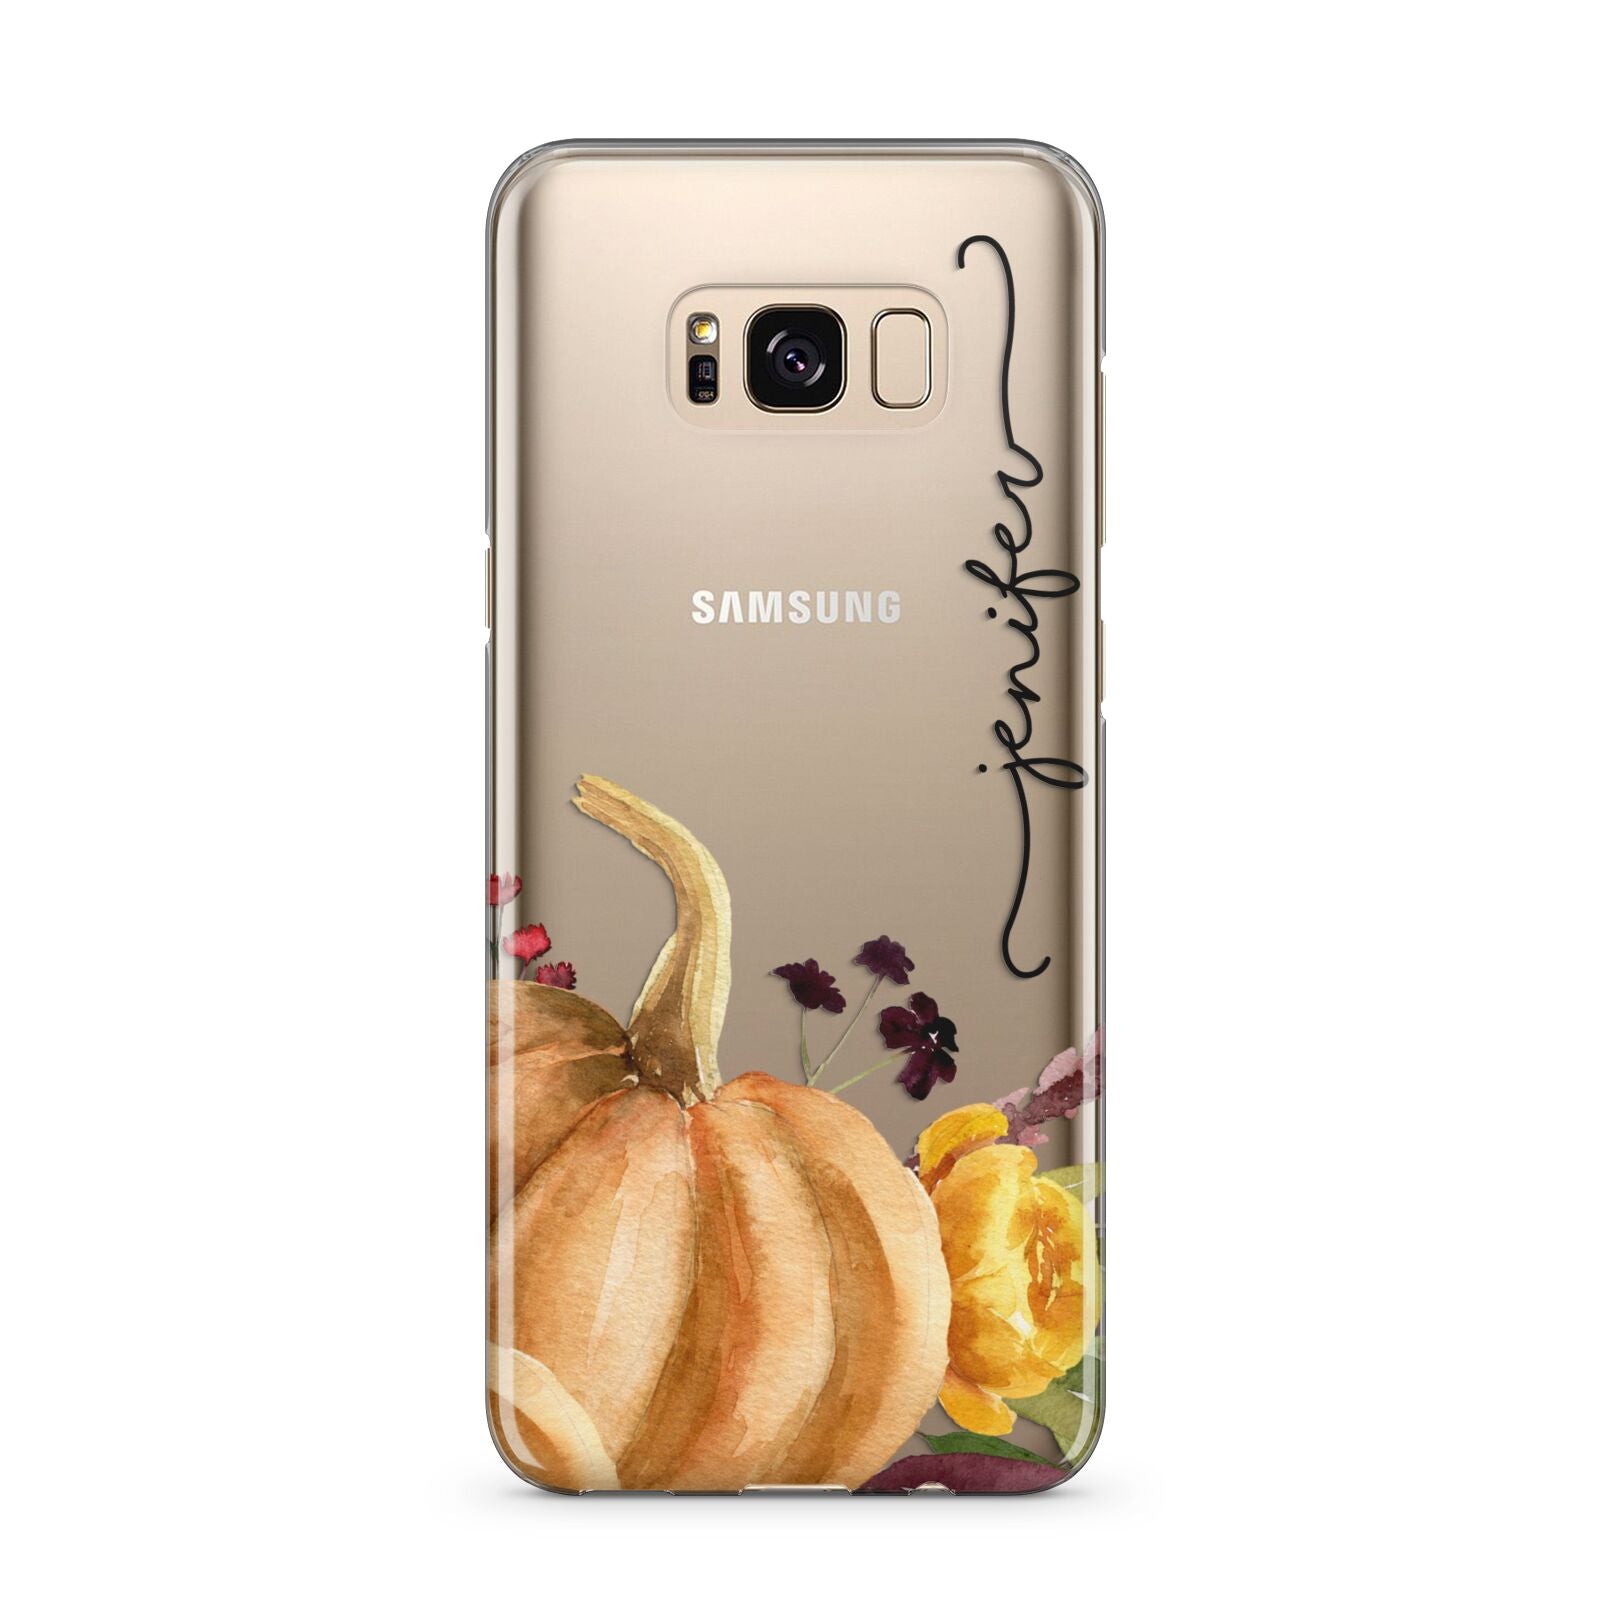 Watercolour Pumpkins with Black Vertical Text Samsung Galaxy S8 Plus Case